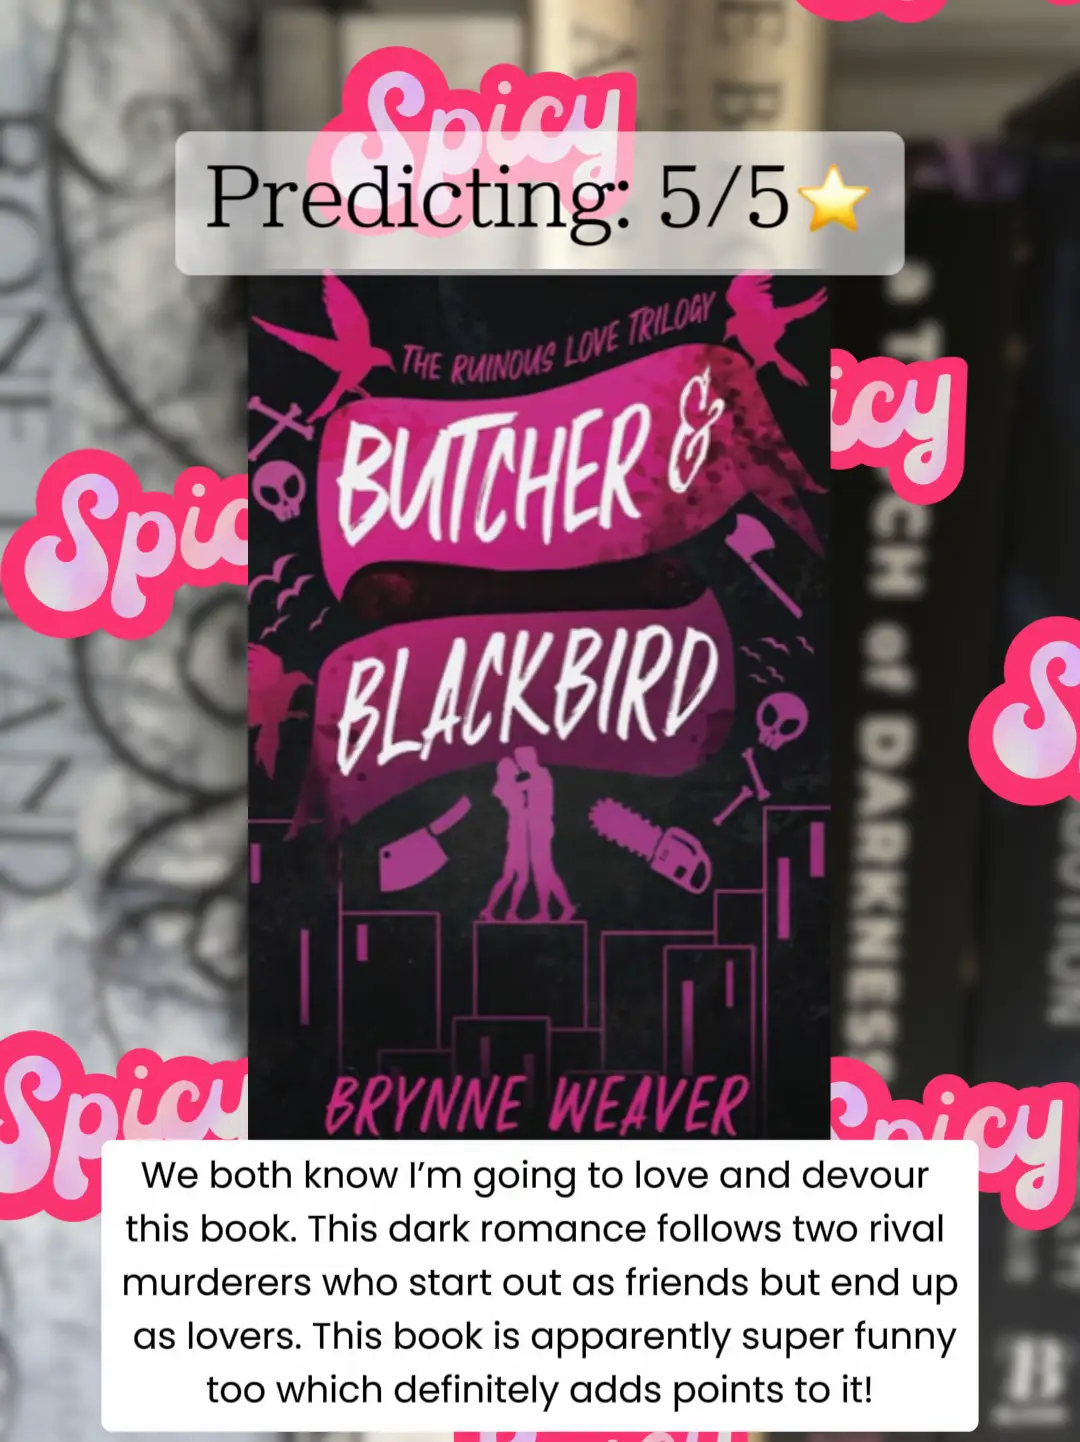 Butcher & Blackbird: The Ruinous Love Trilogy (The Ruinous Love